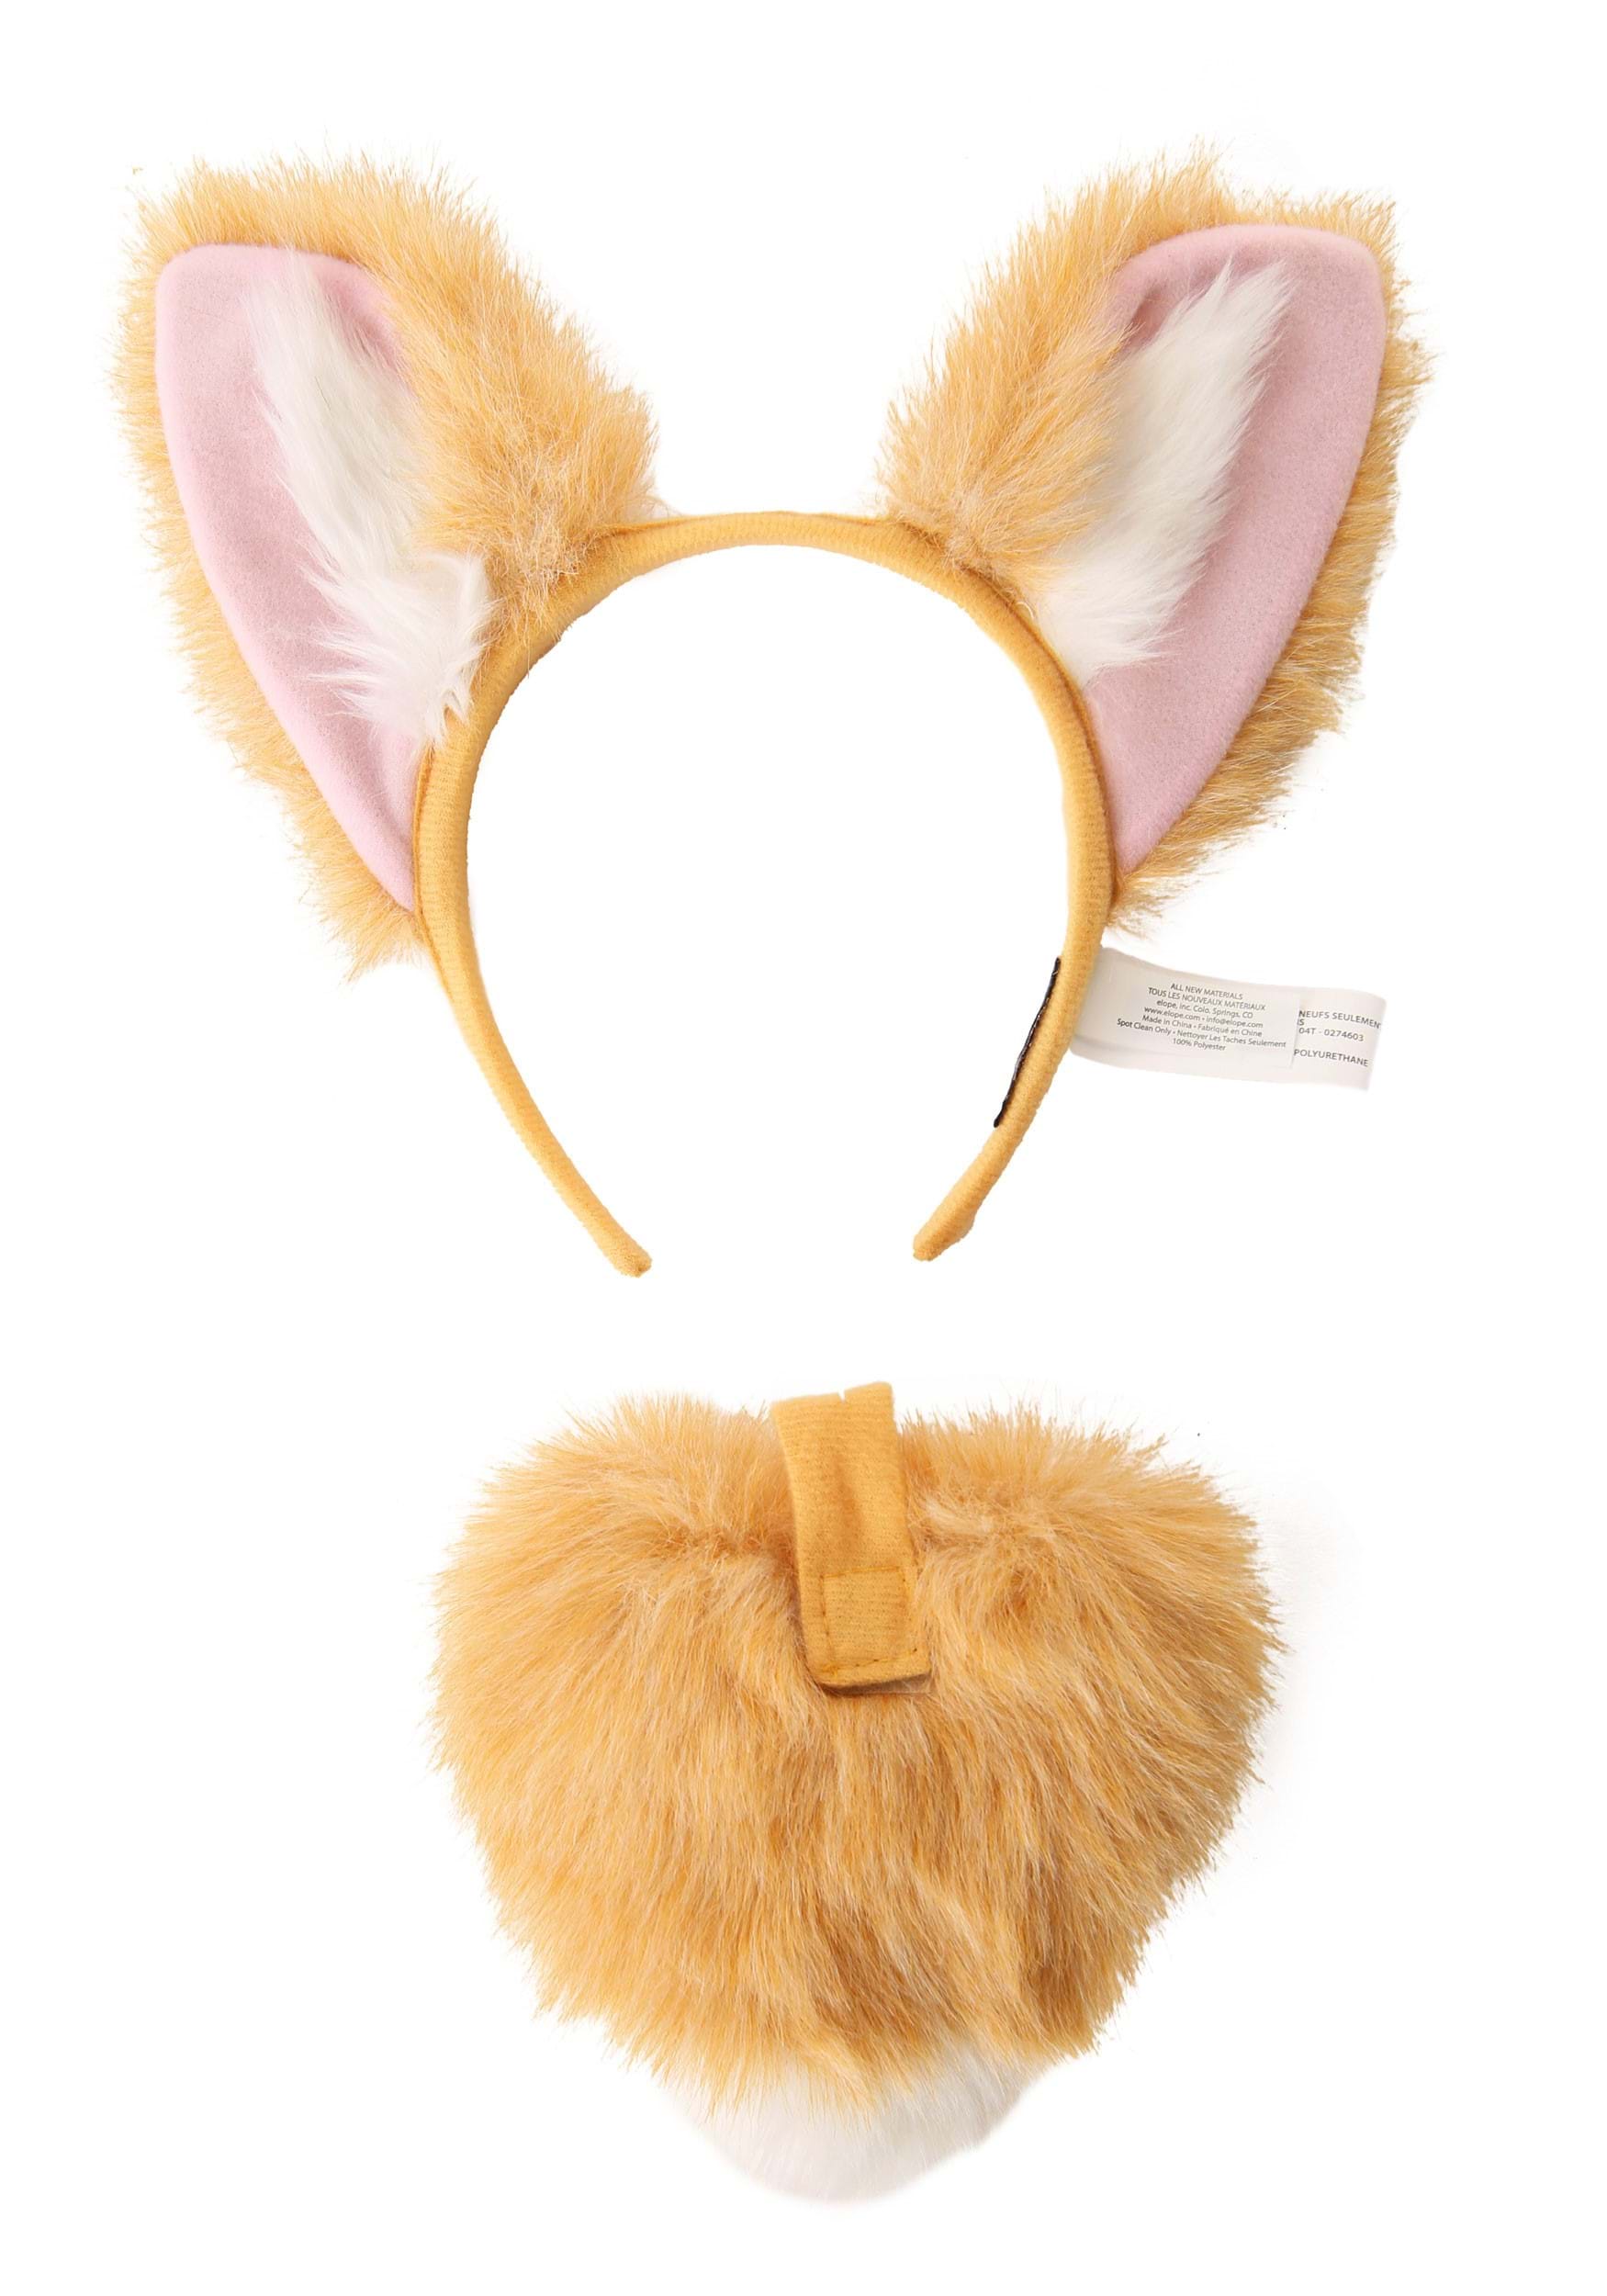 Corgi Ears, Headband & Tail Kit